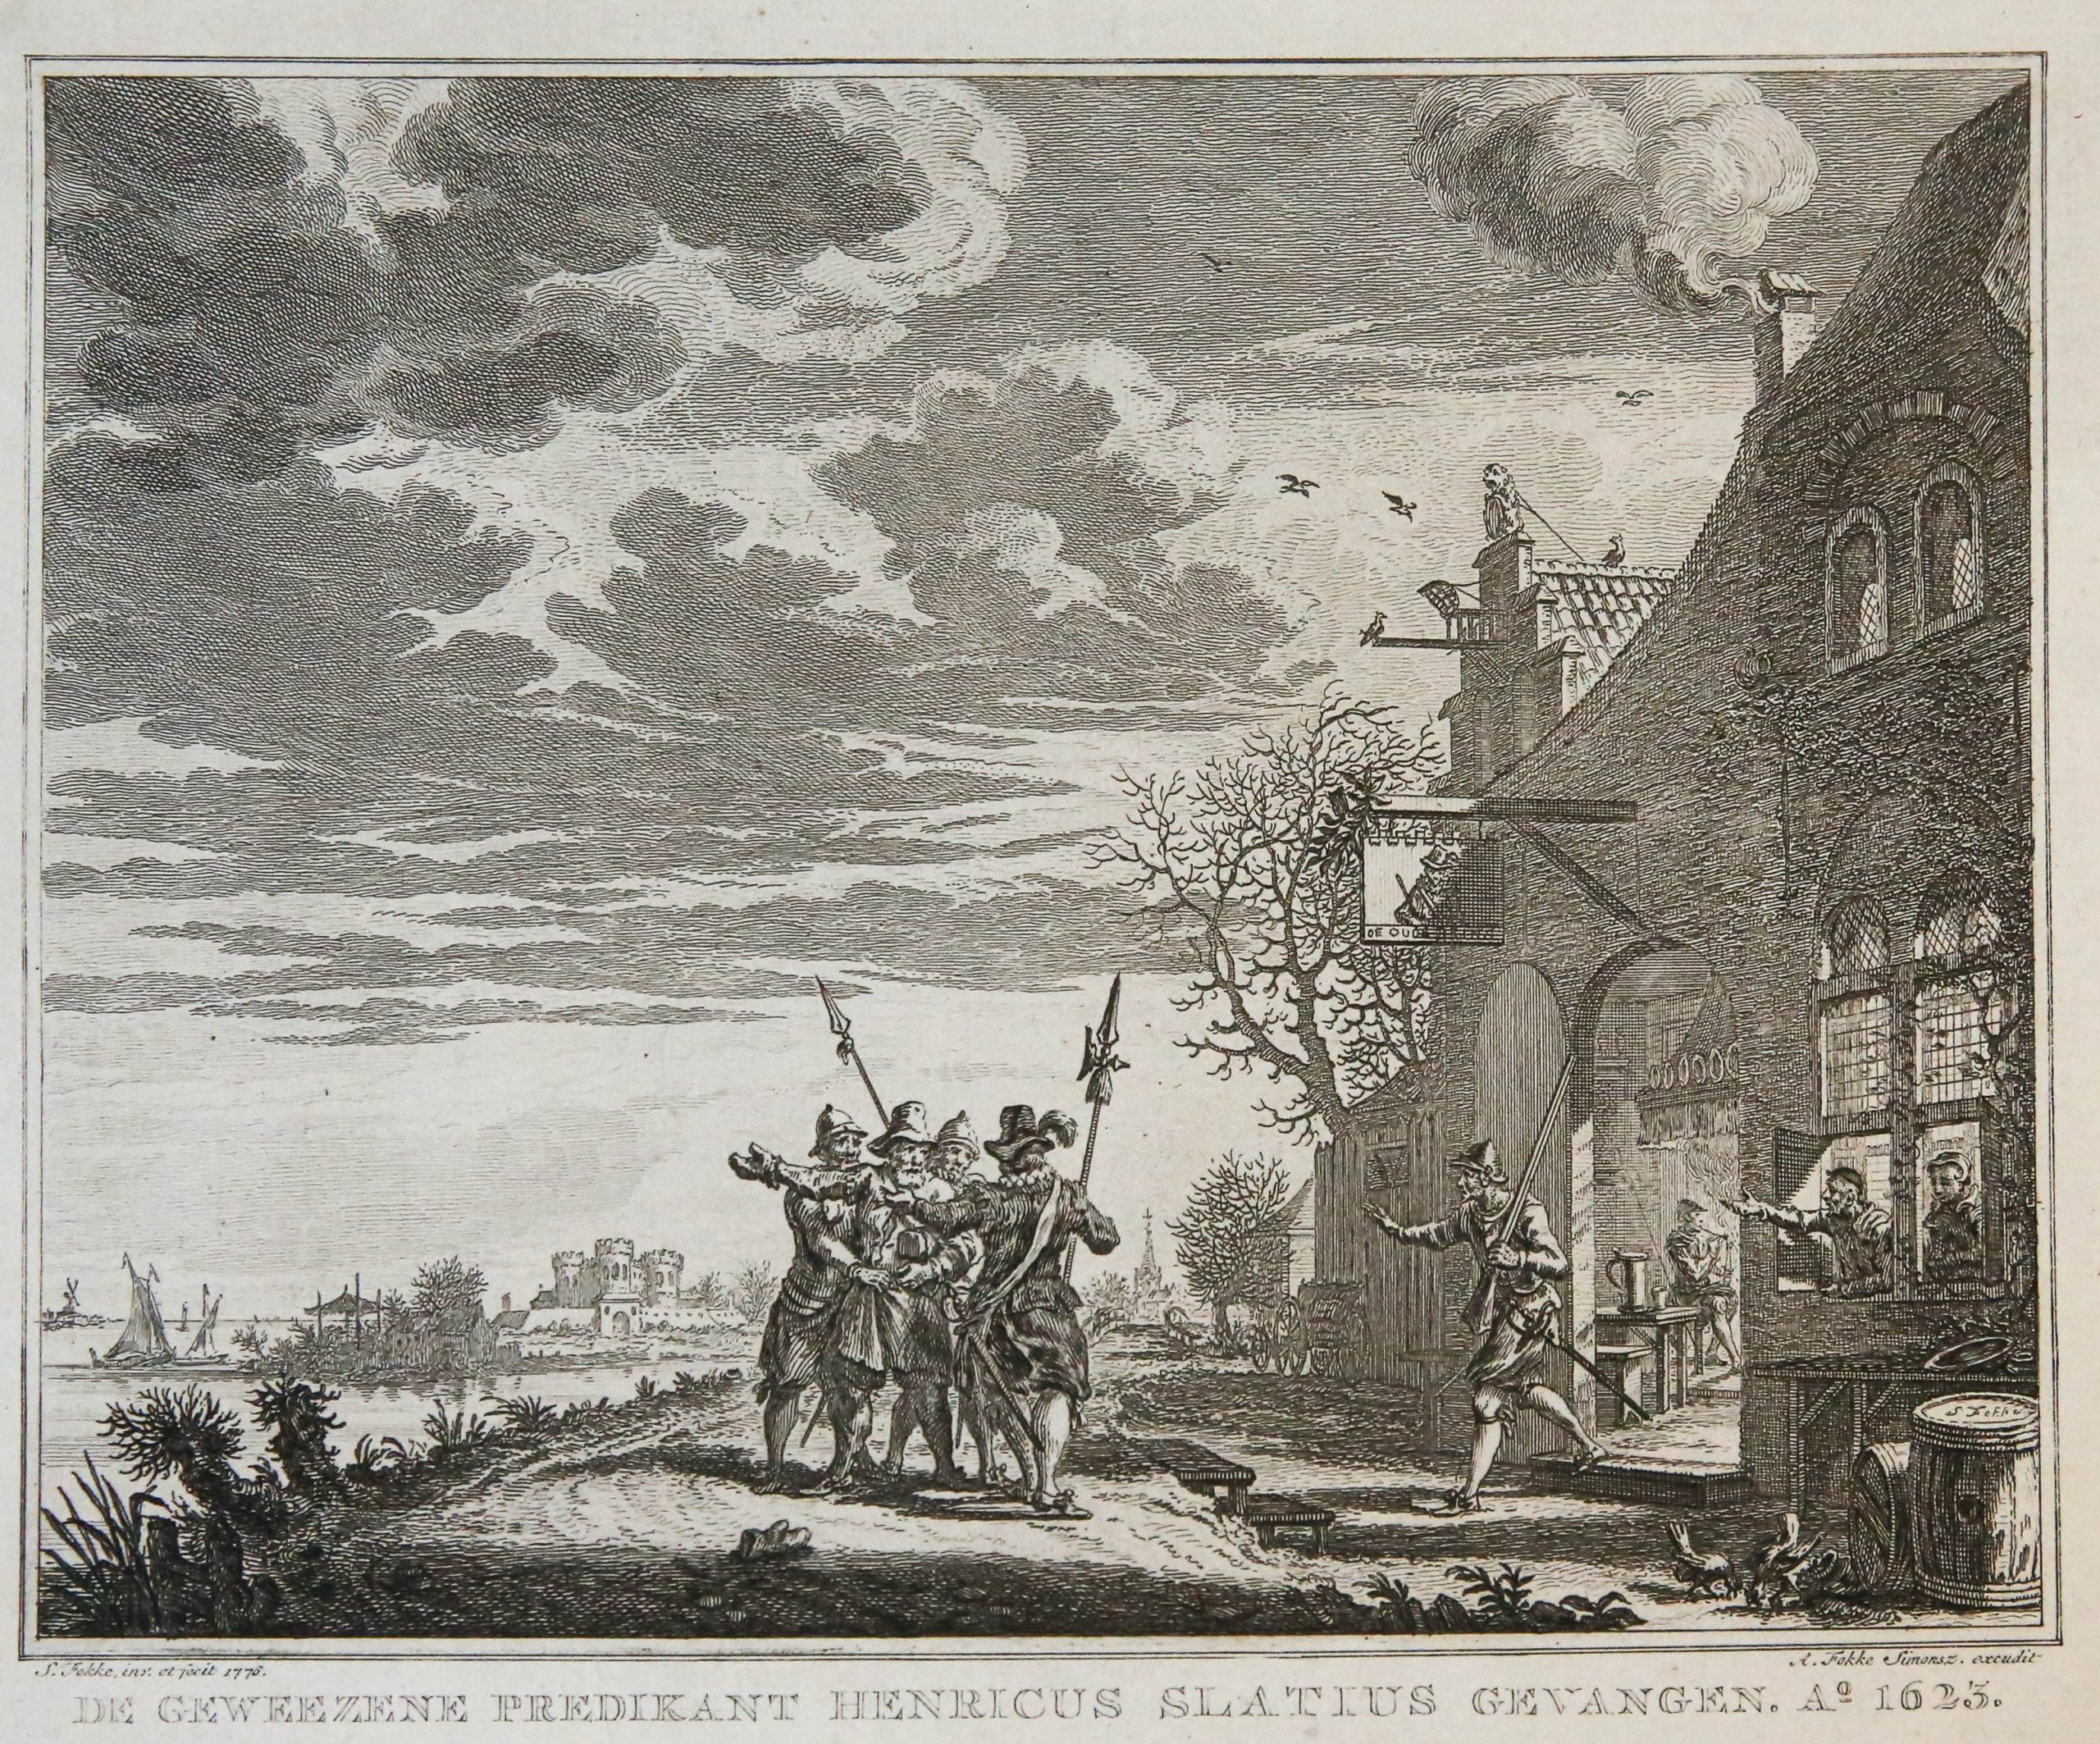 'De geweezene predikant Henricus Slatius gevangen Ao. 1623'; minister Henricus Slatius arrested, 1623